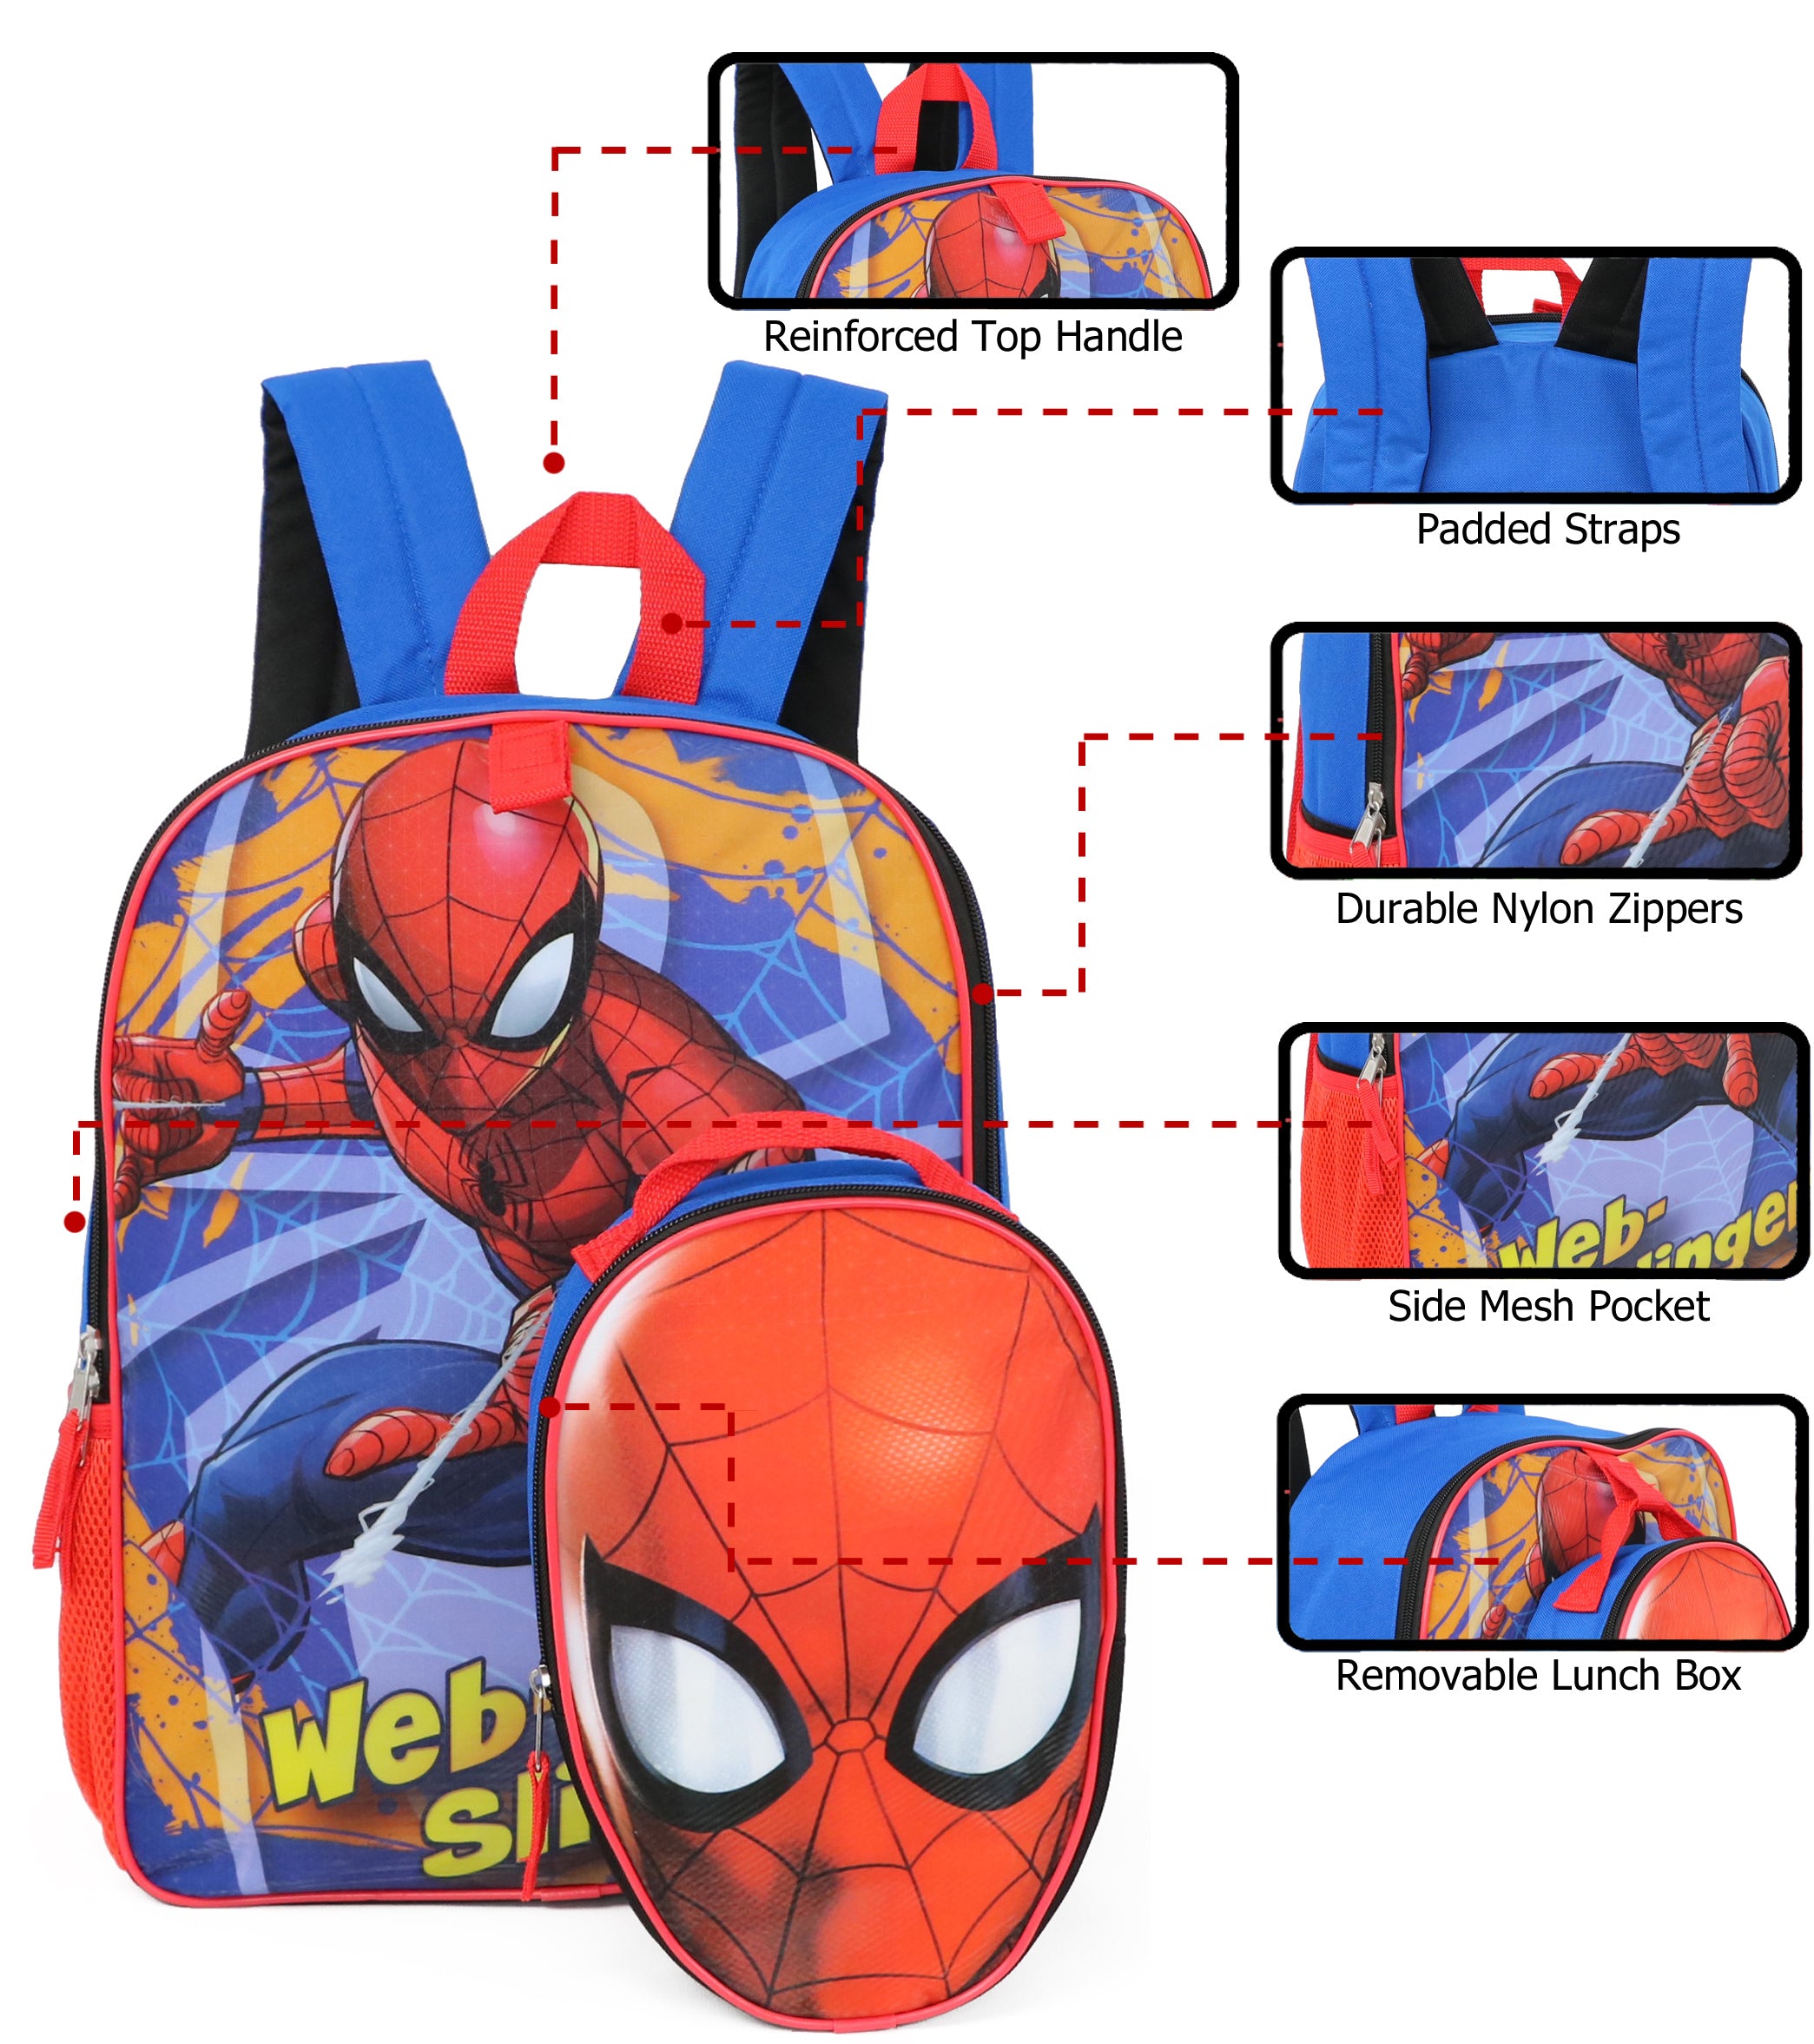 Disney Cartoon Spiderman Backpack Back to School Bag Students